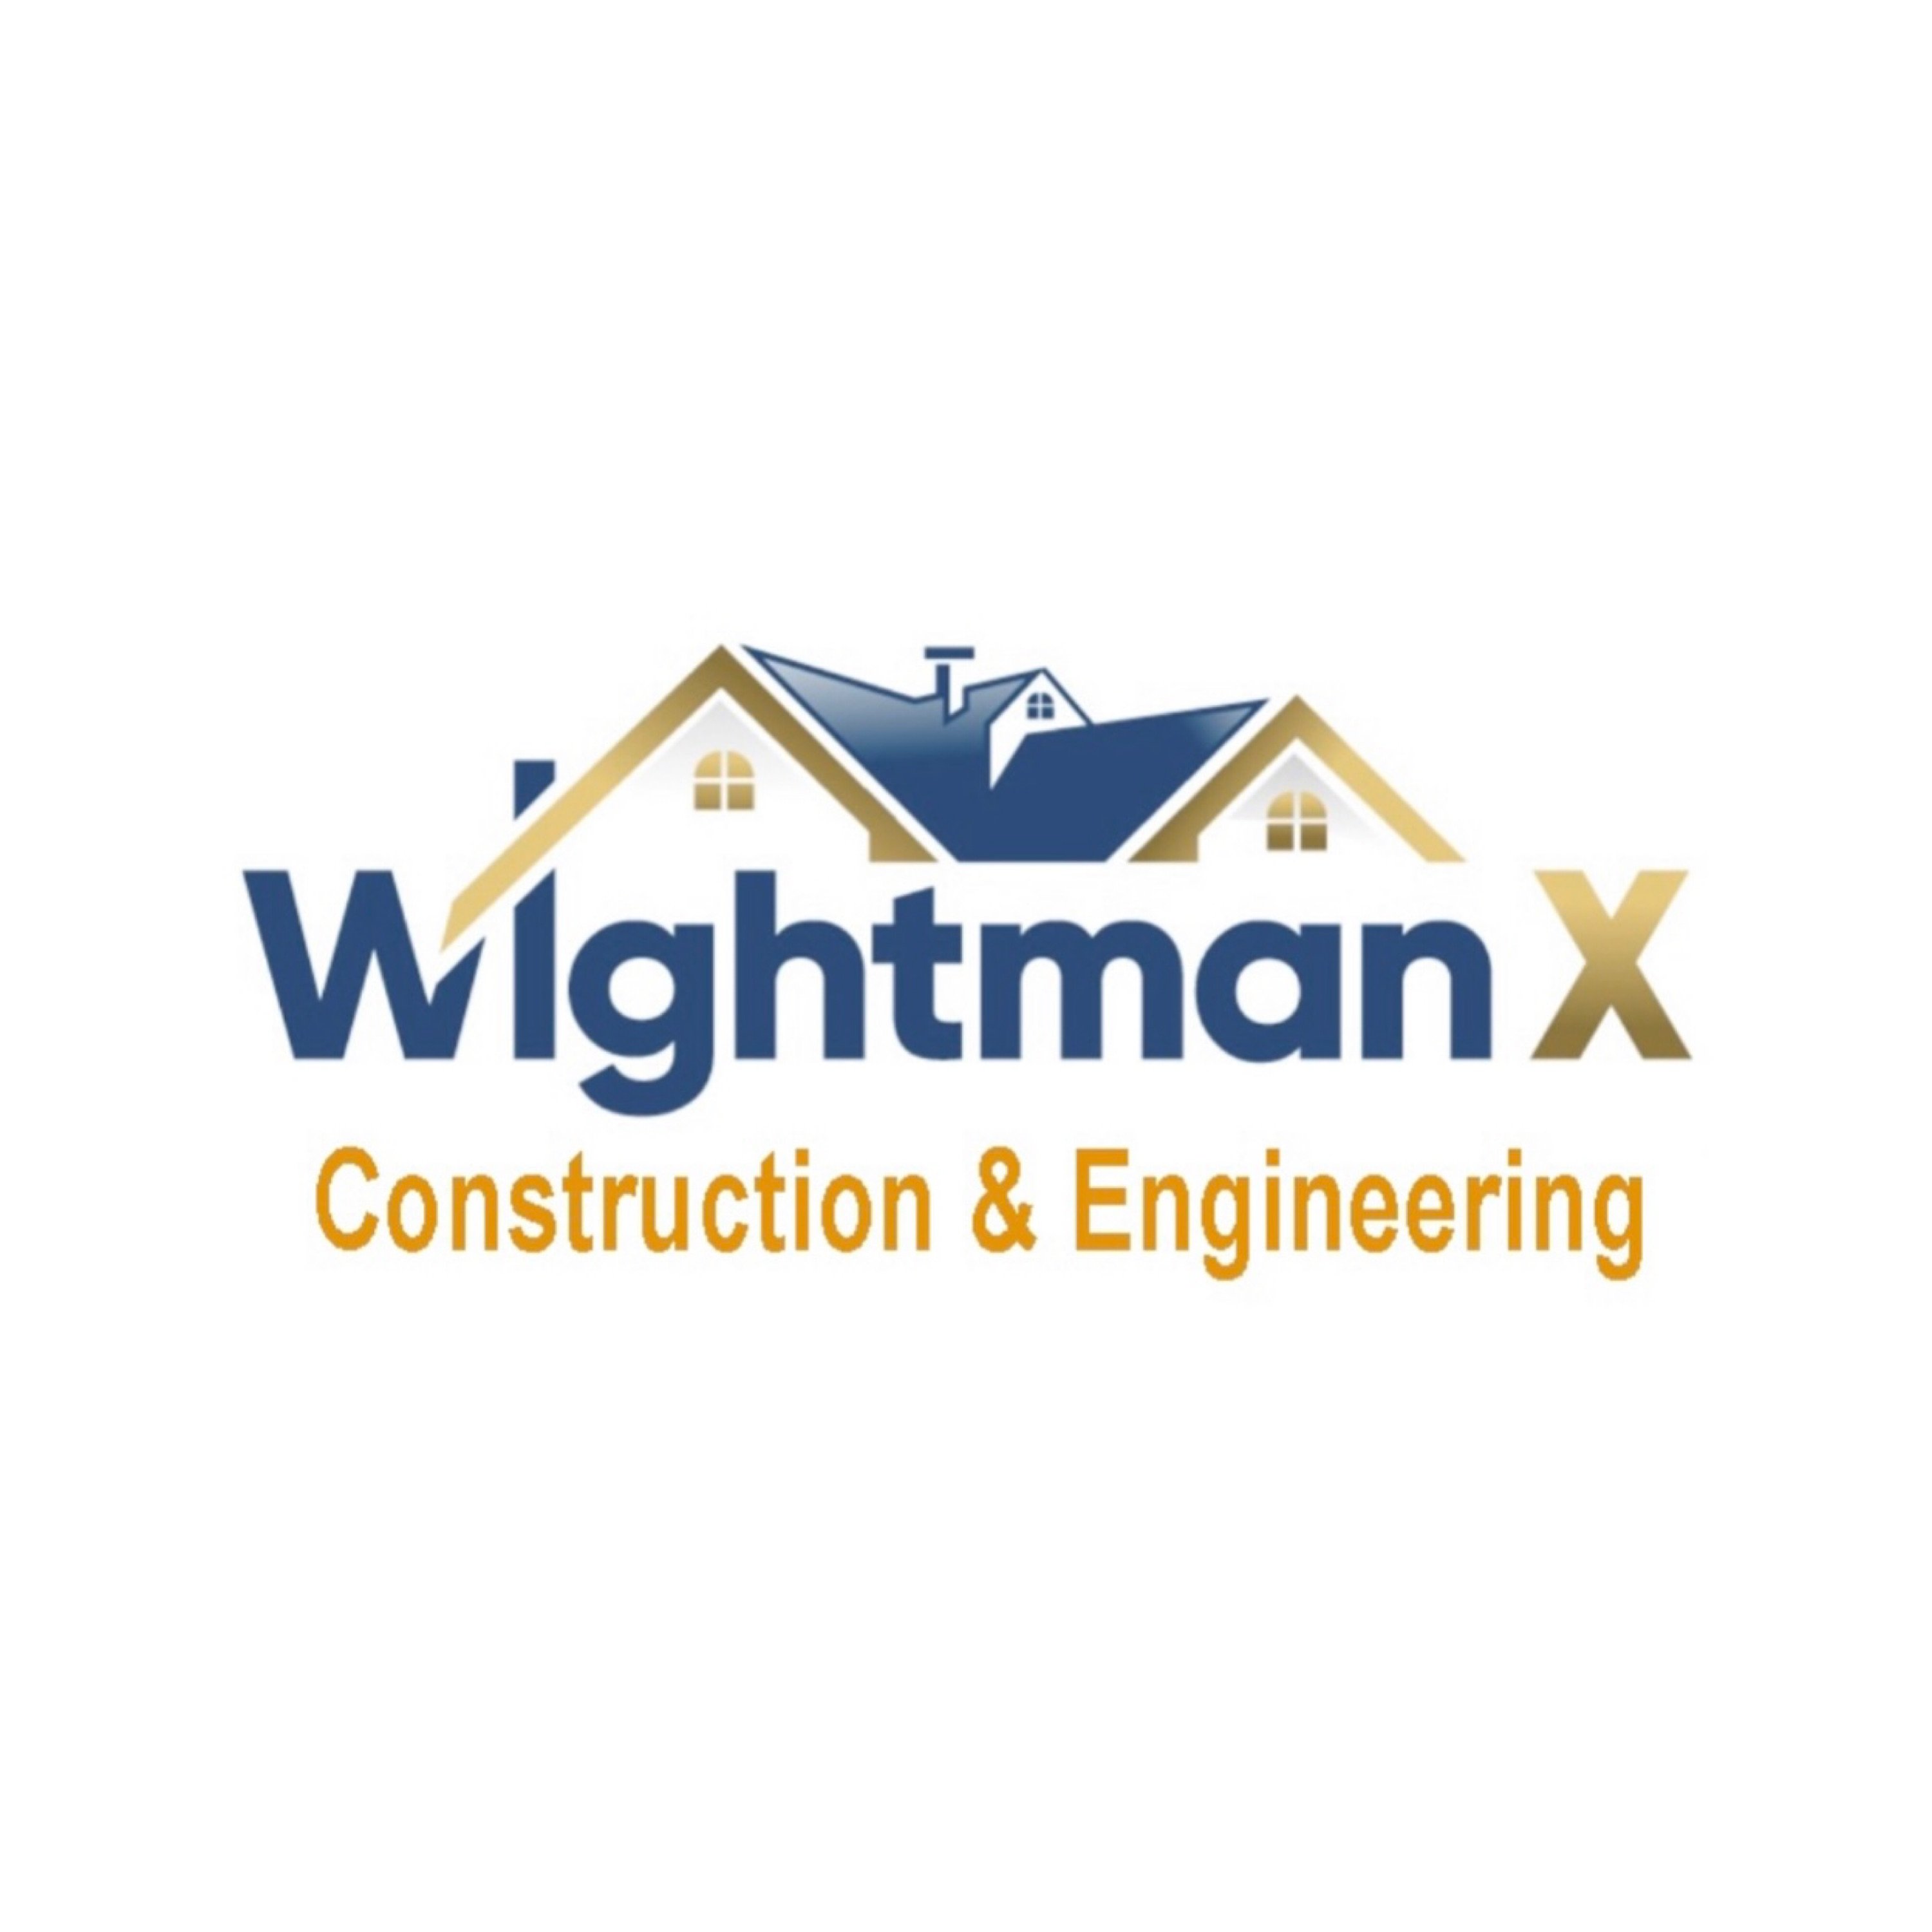 Wightman X Logo